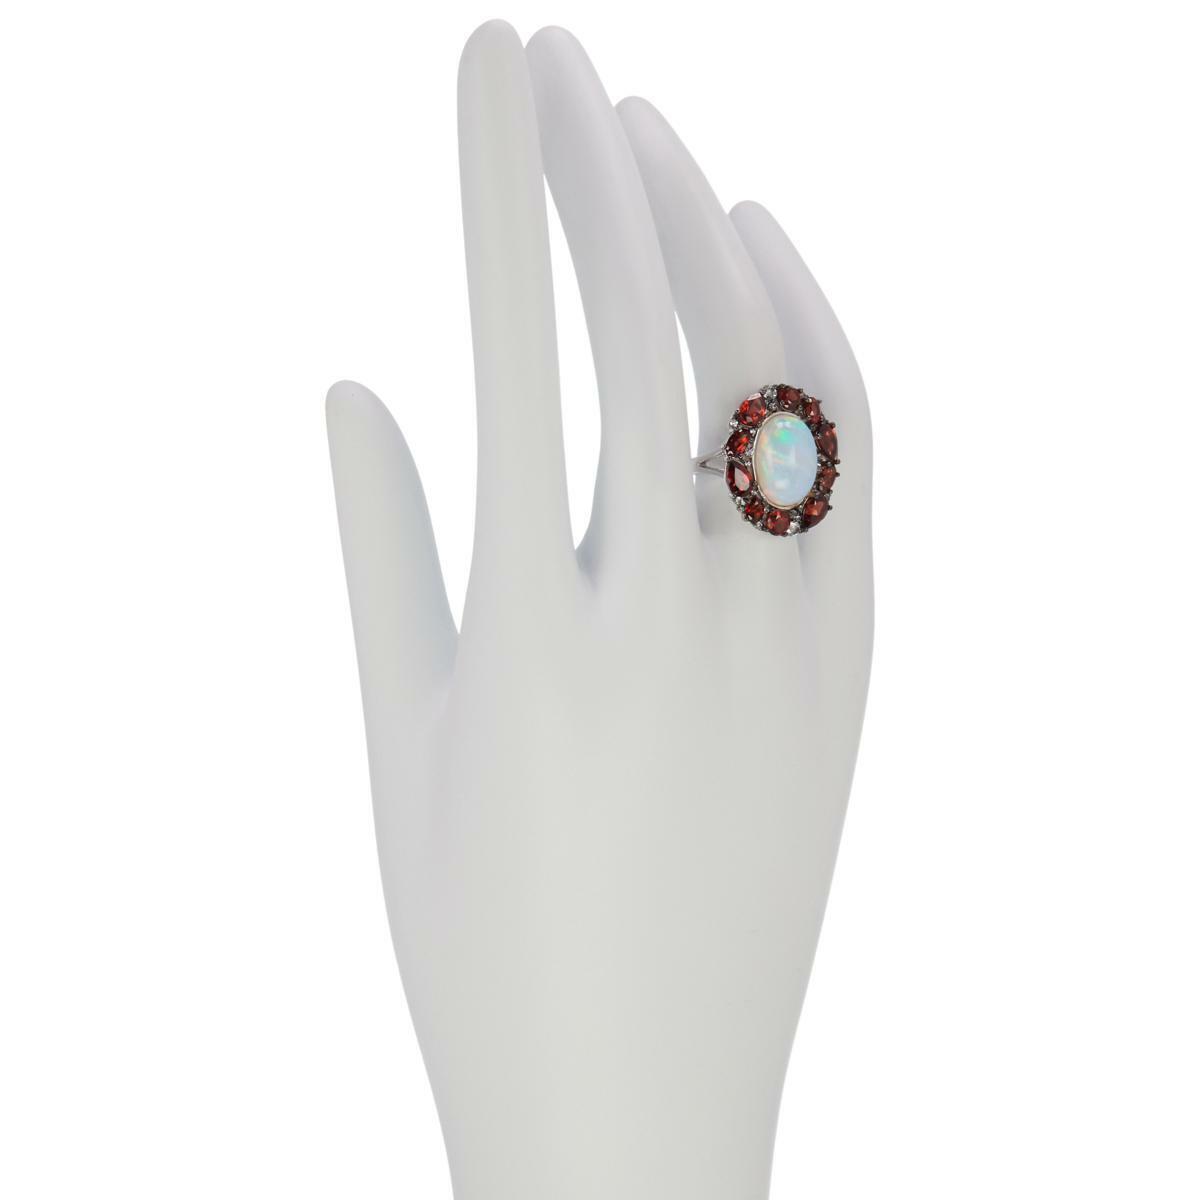 Paul Deasy Gem Opal, Garnet & White Topaz Sterling Silver Oval Ring Size 7